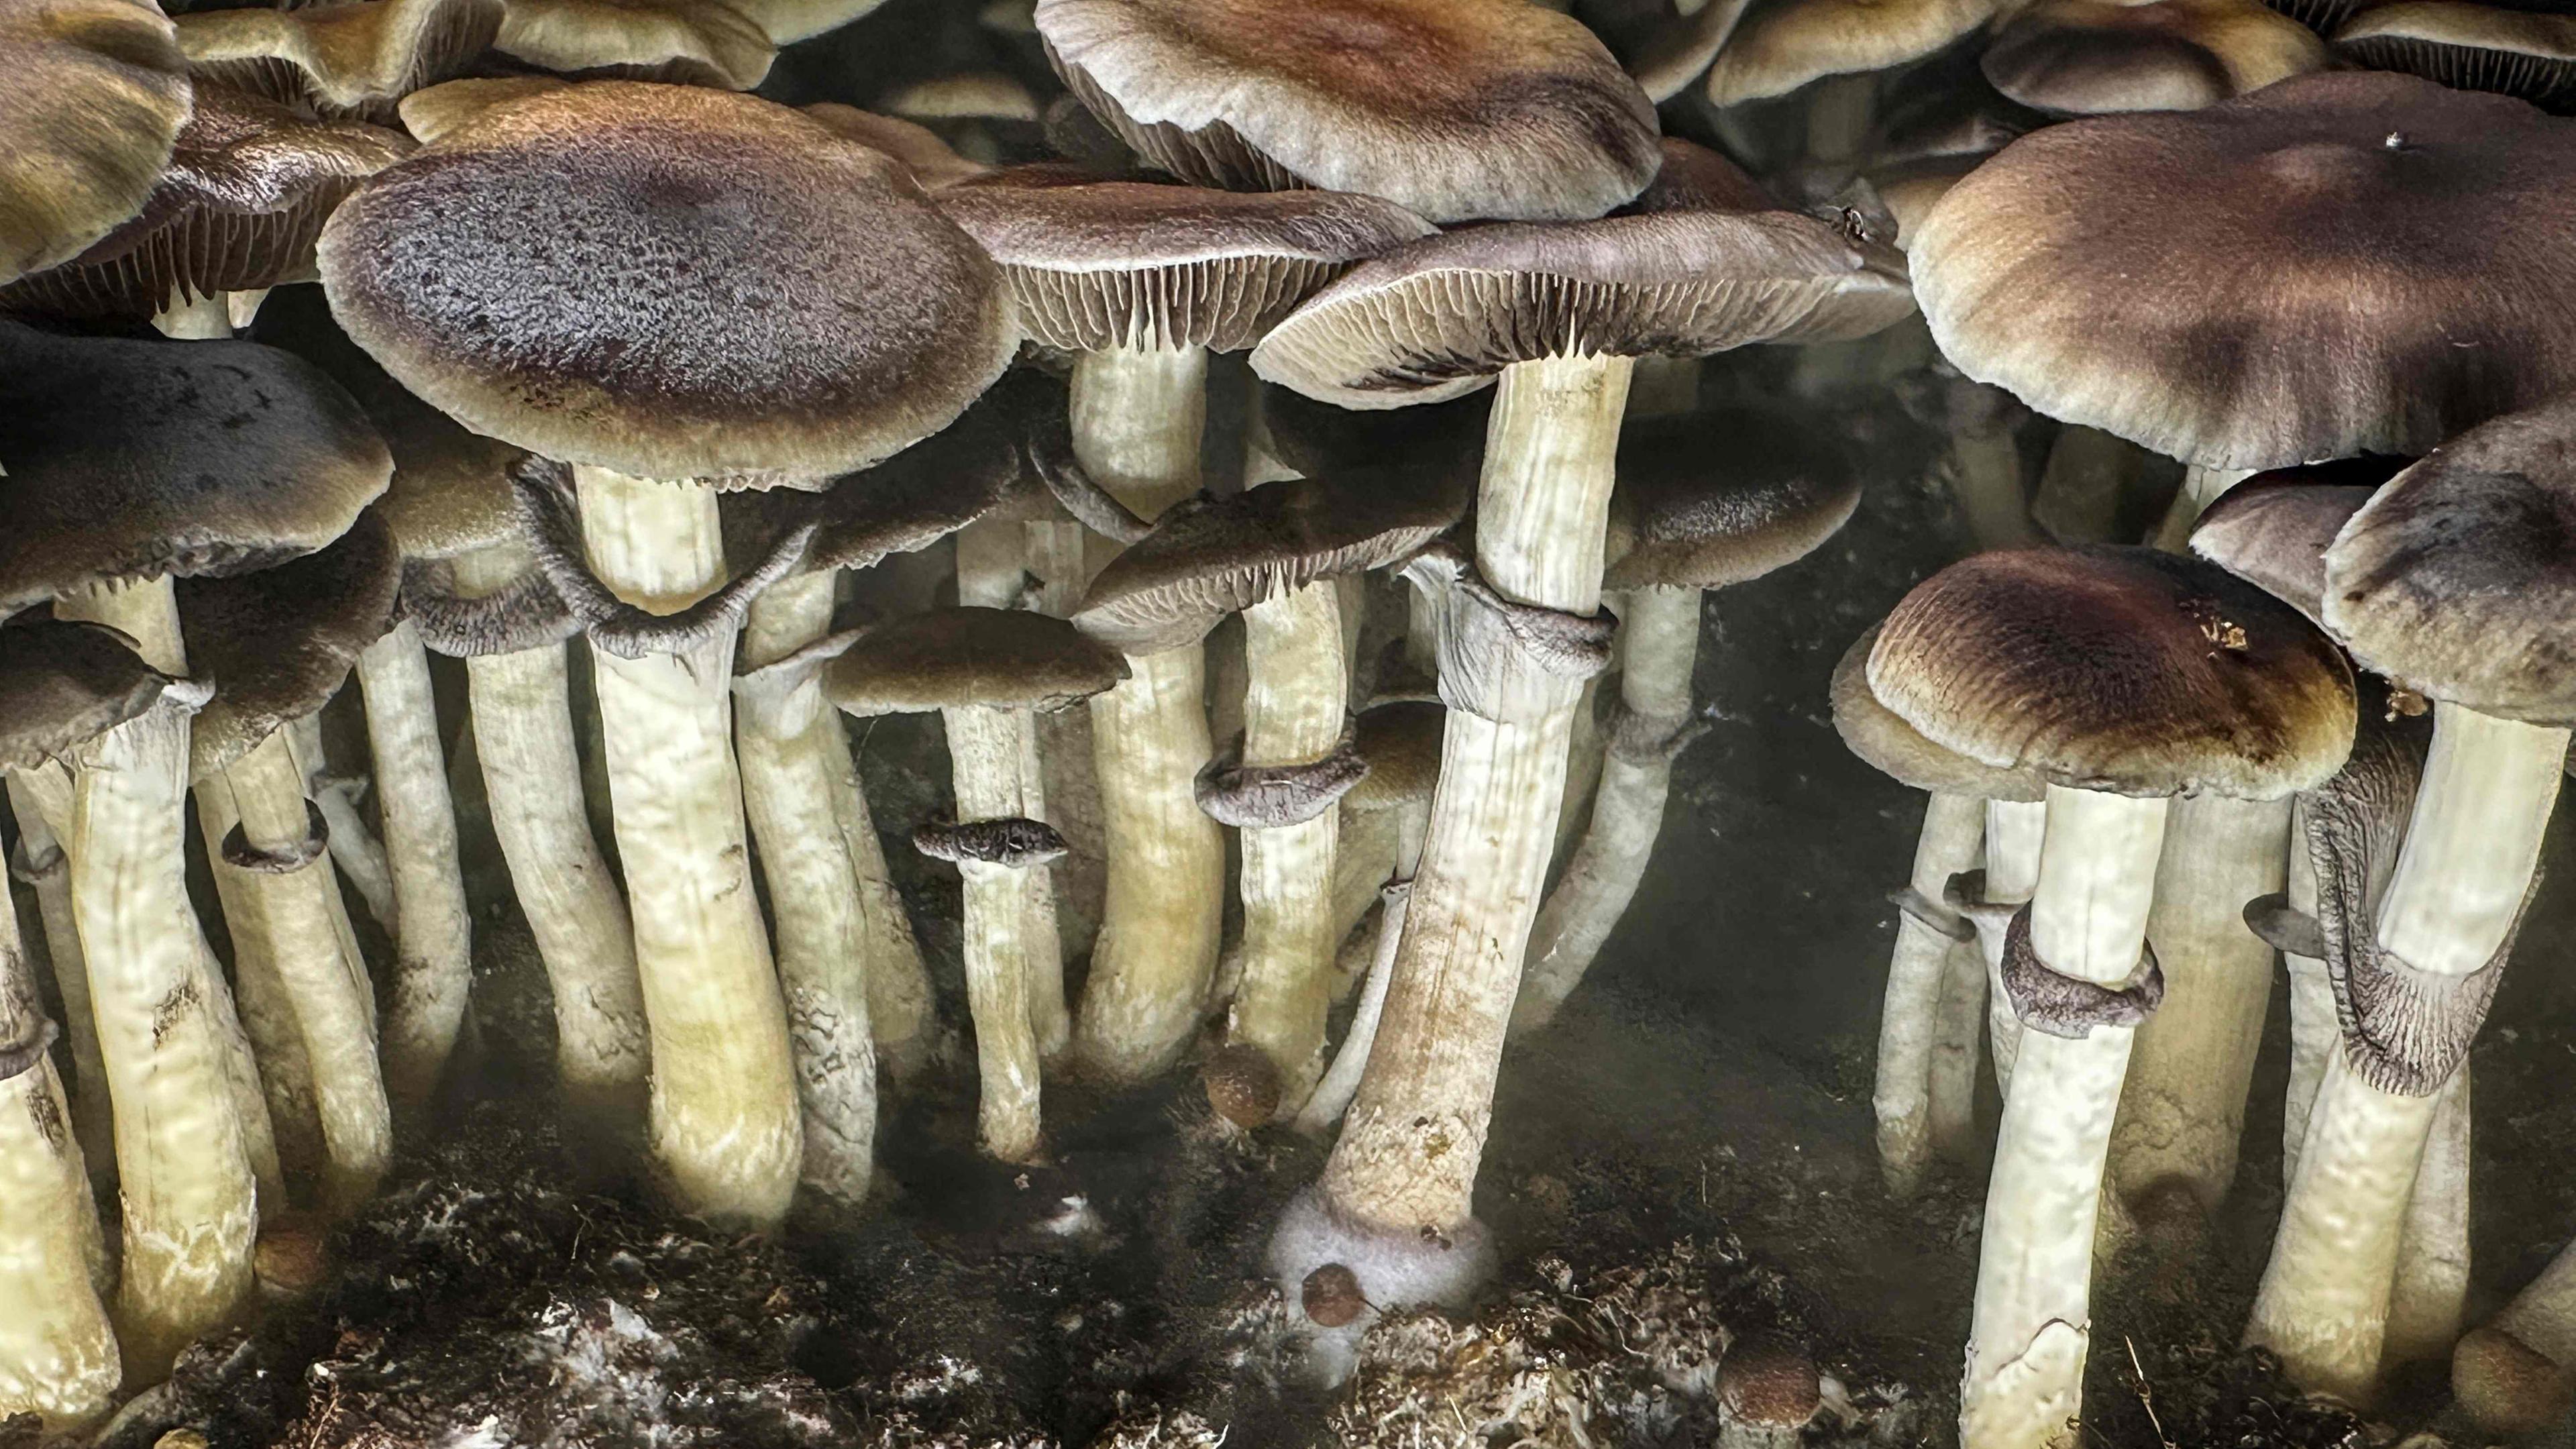 Psilocybin Mushrooms Increasingly Sought For Therapeutic Purposes